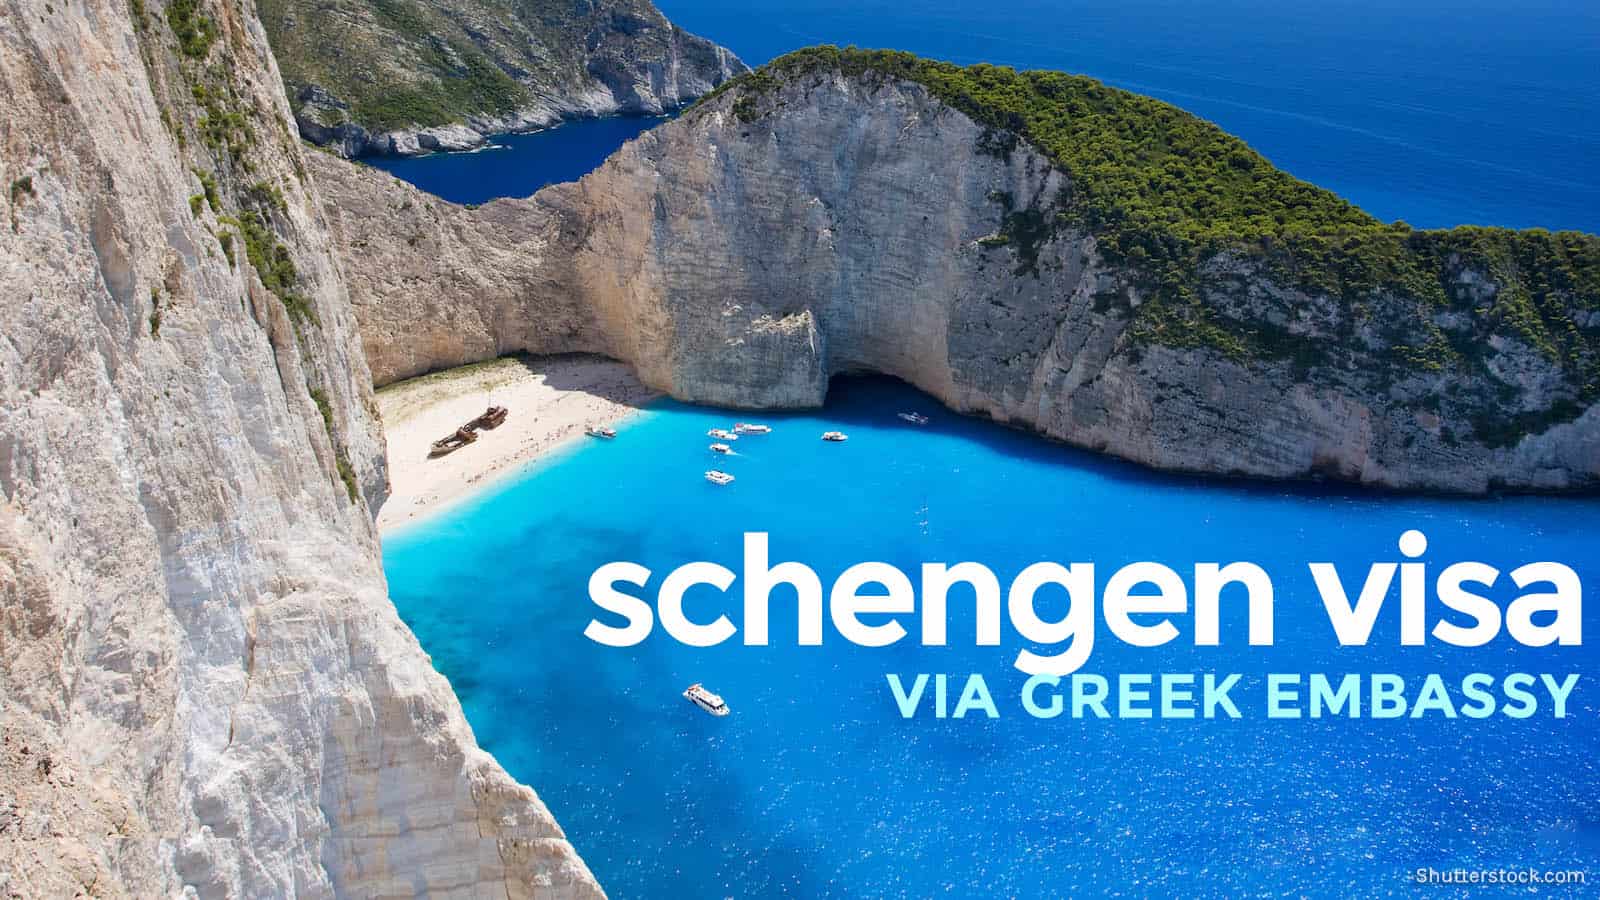 SCHENGEN VISA via GREEK EMBASSY: Requirements, Appointment, Application